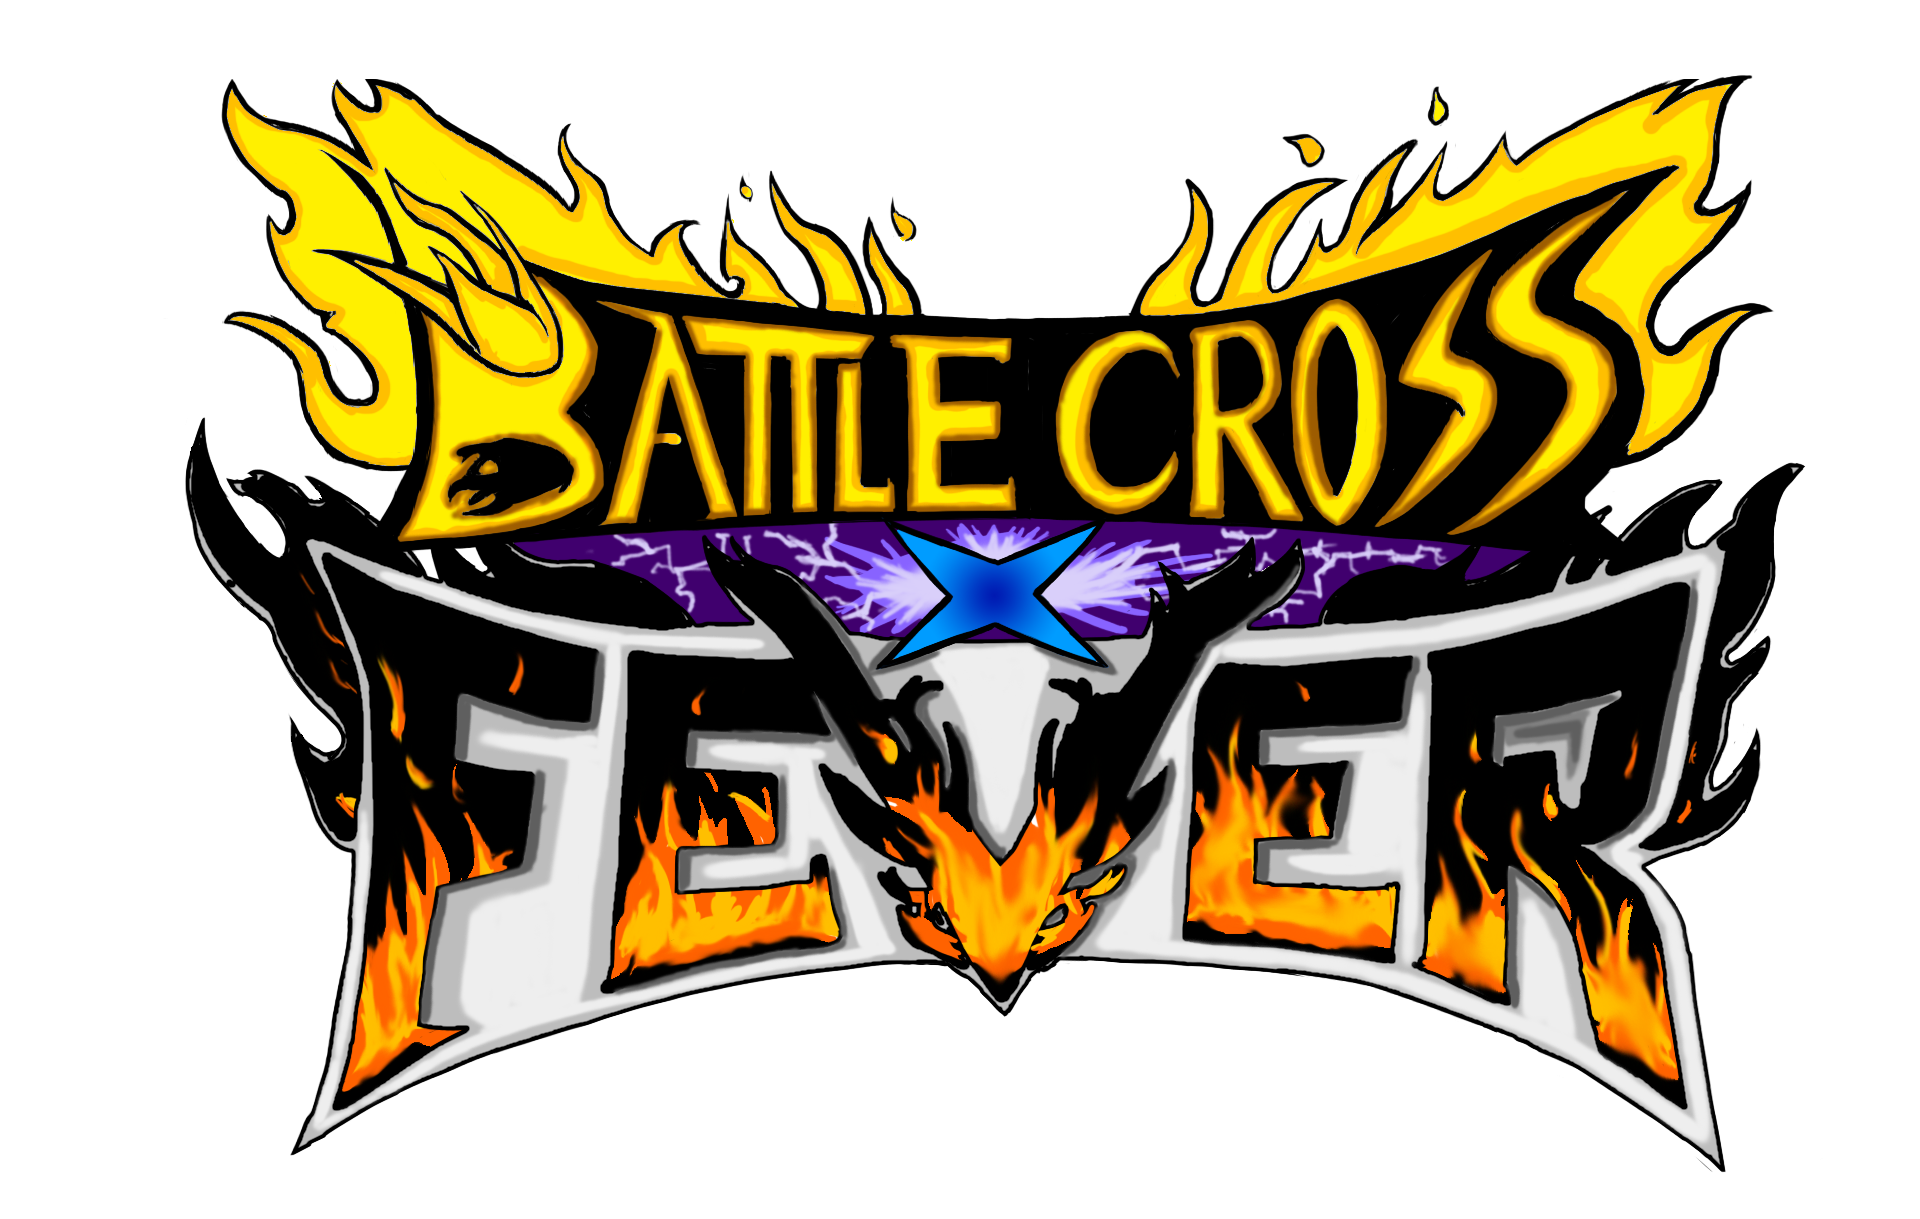 Battle Cross Fever Release Get Ready For A New Battle